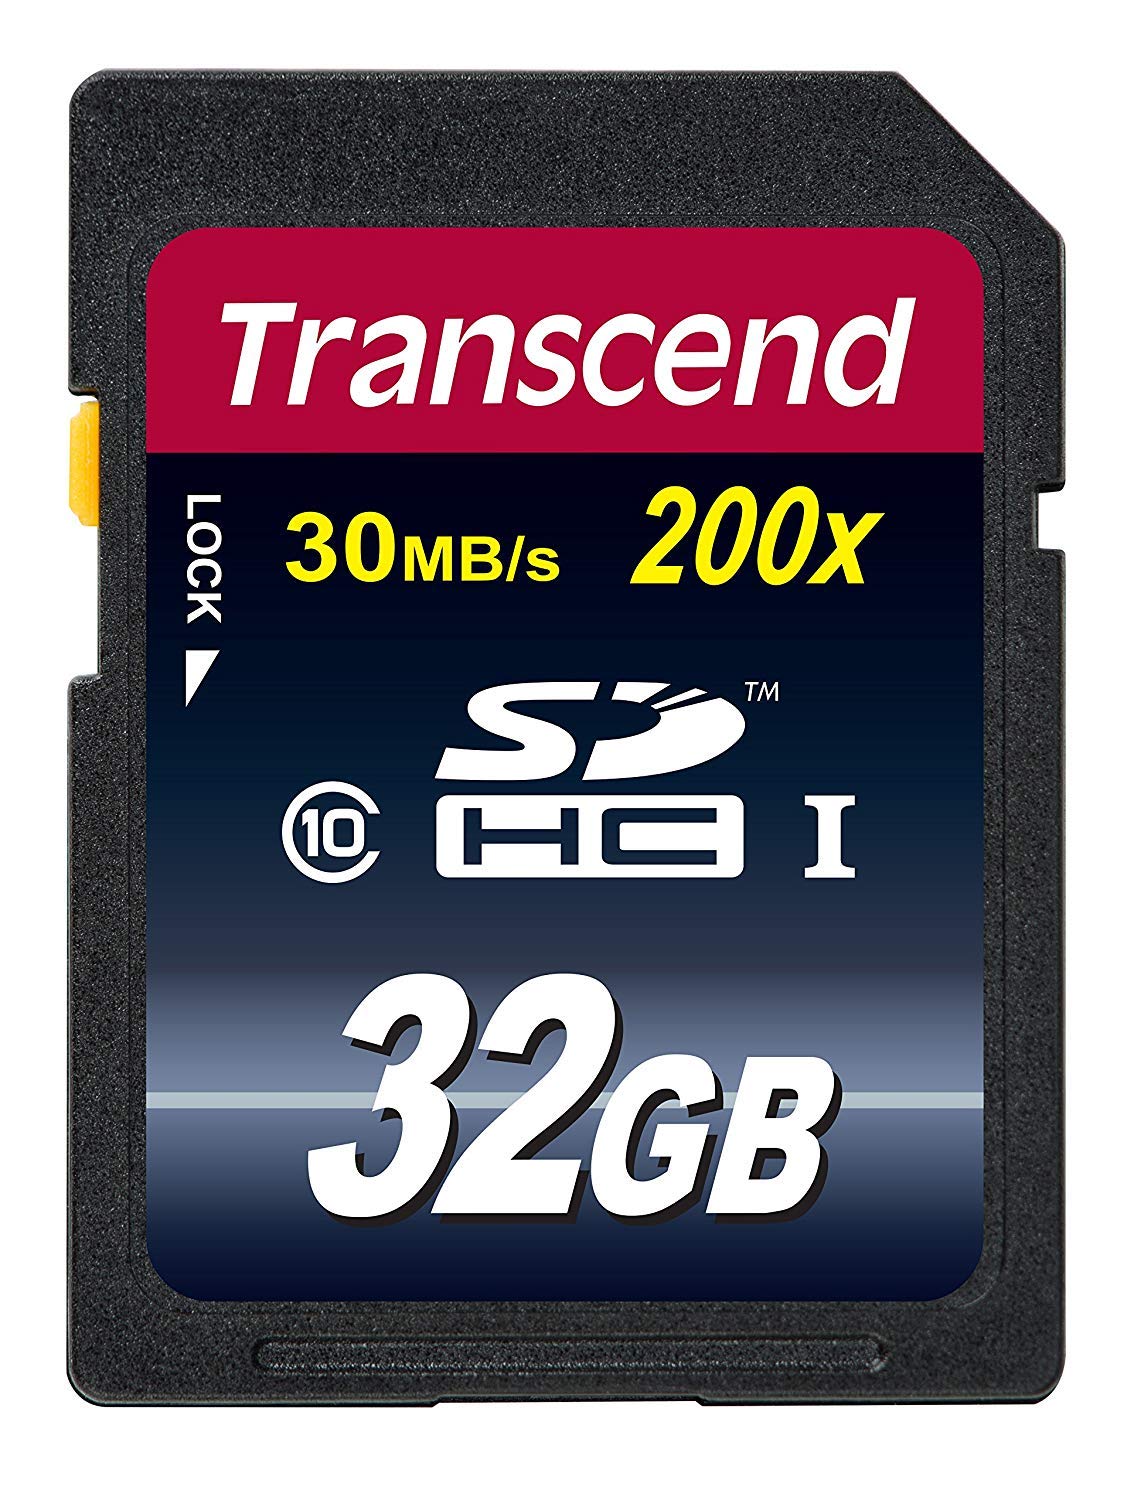 SDHC CARD 32GB (CLASS 10) MLC